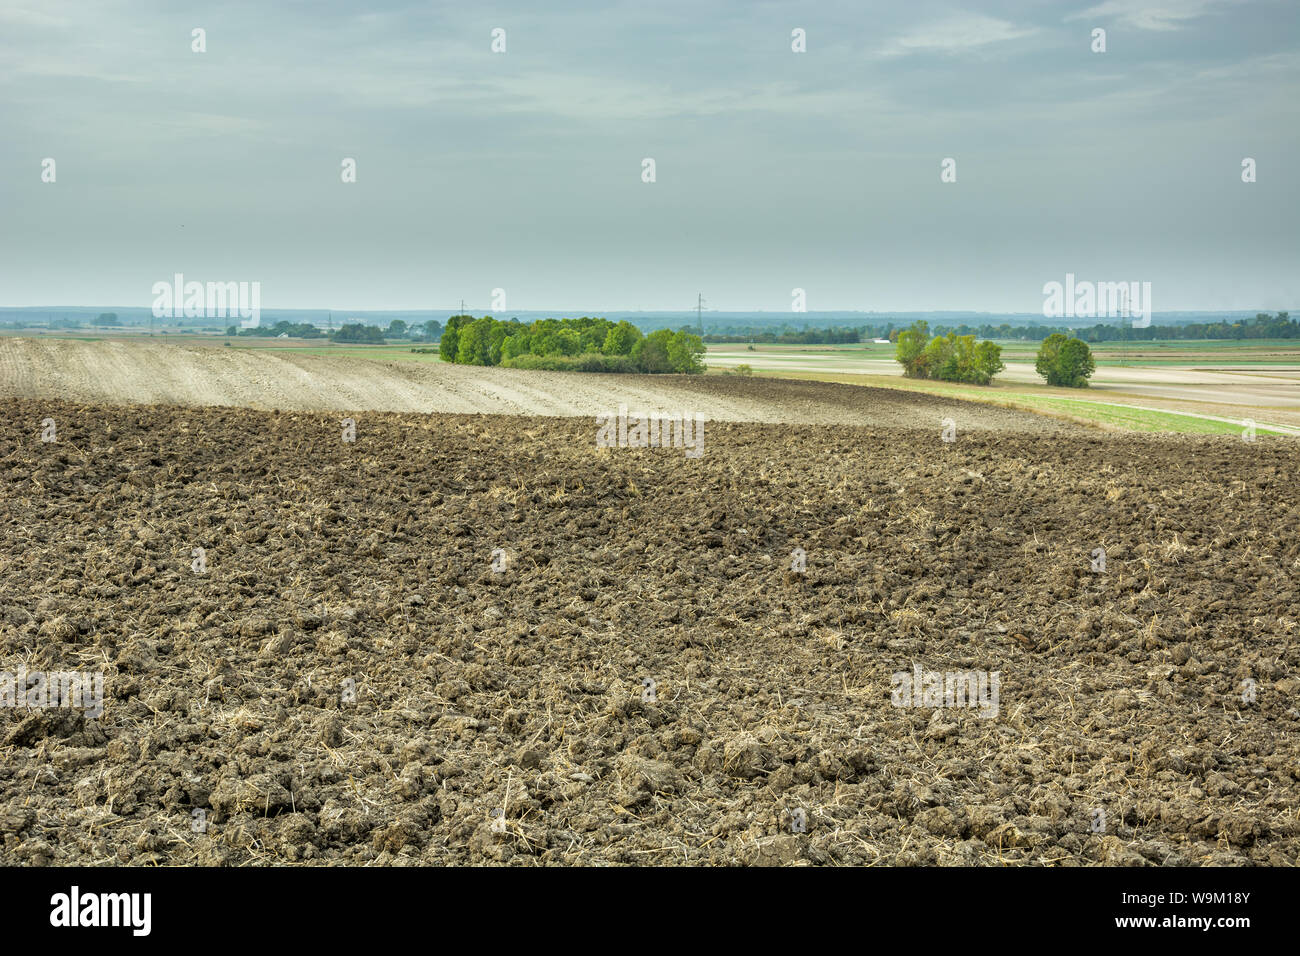 Große gepflügten Feldes, Bäume am Horizont und bewölkter Himmel. Staw, Polen Stockfoto